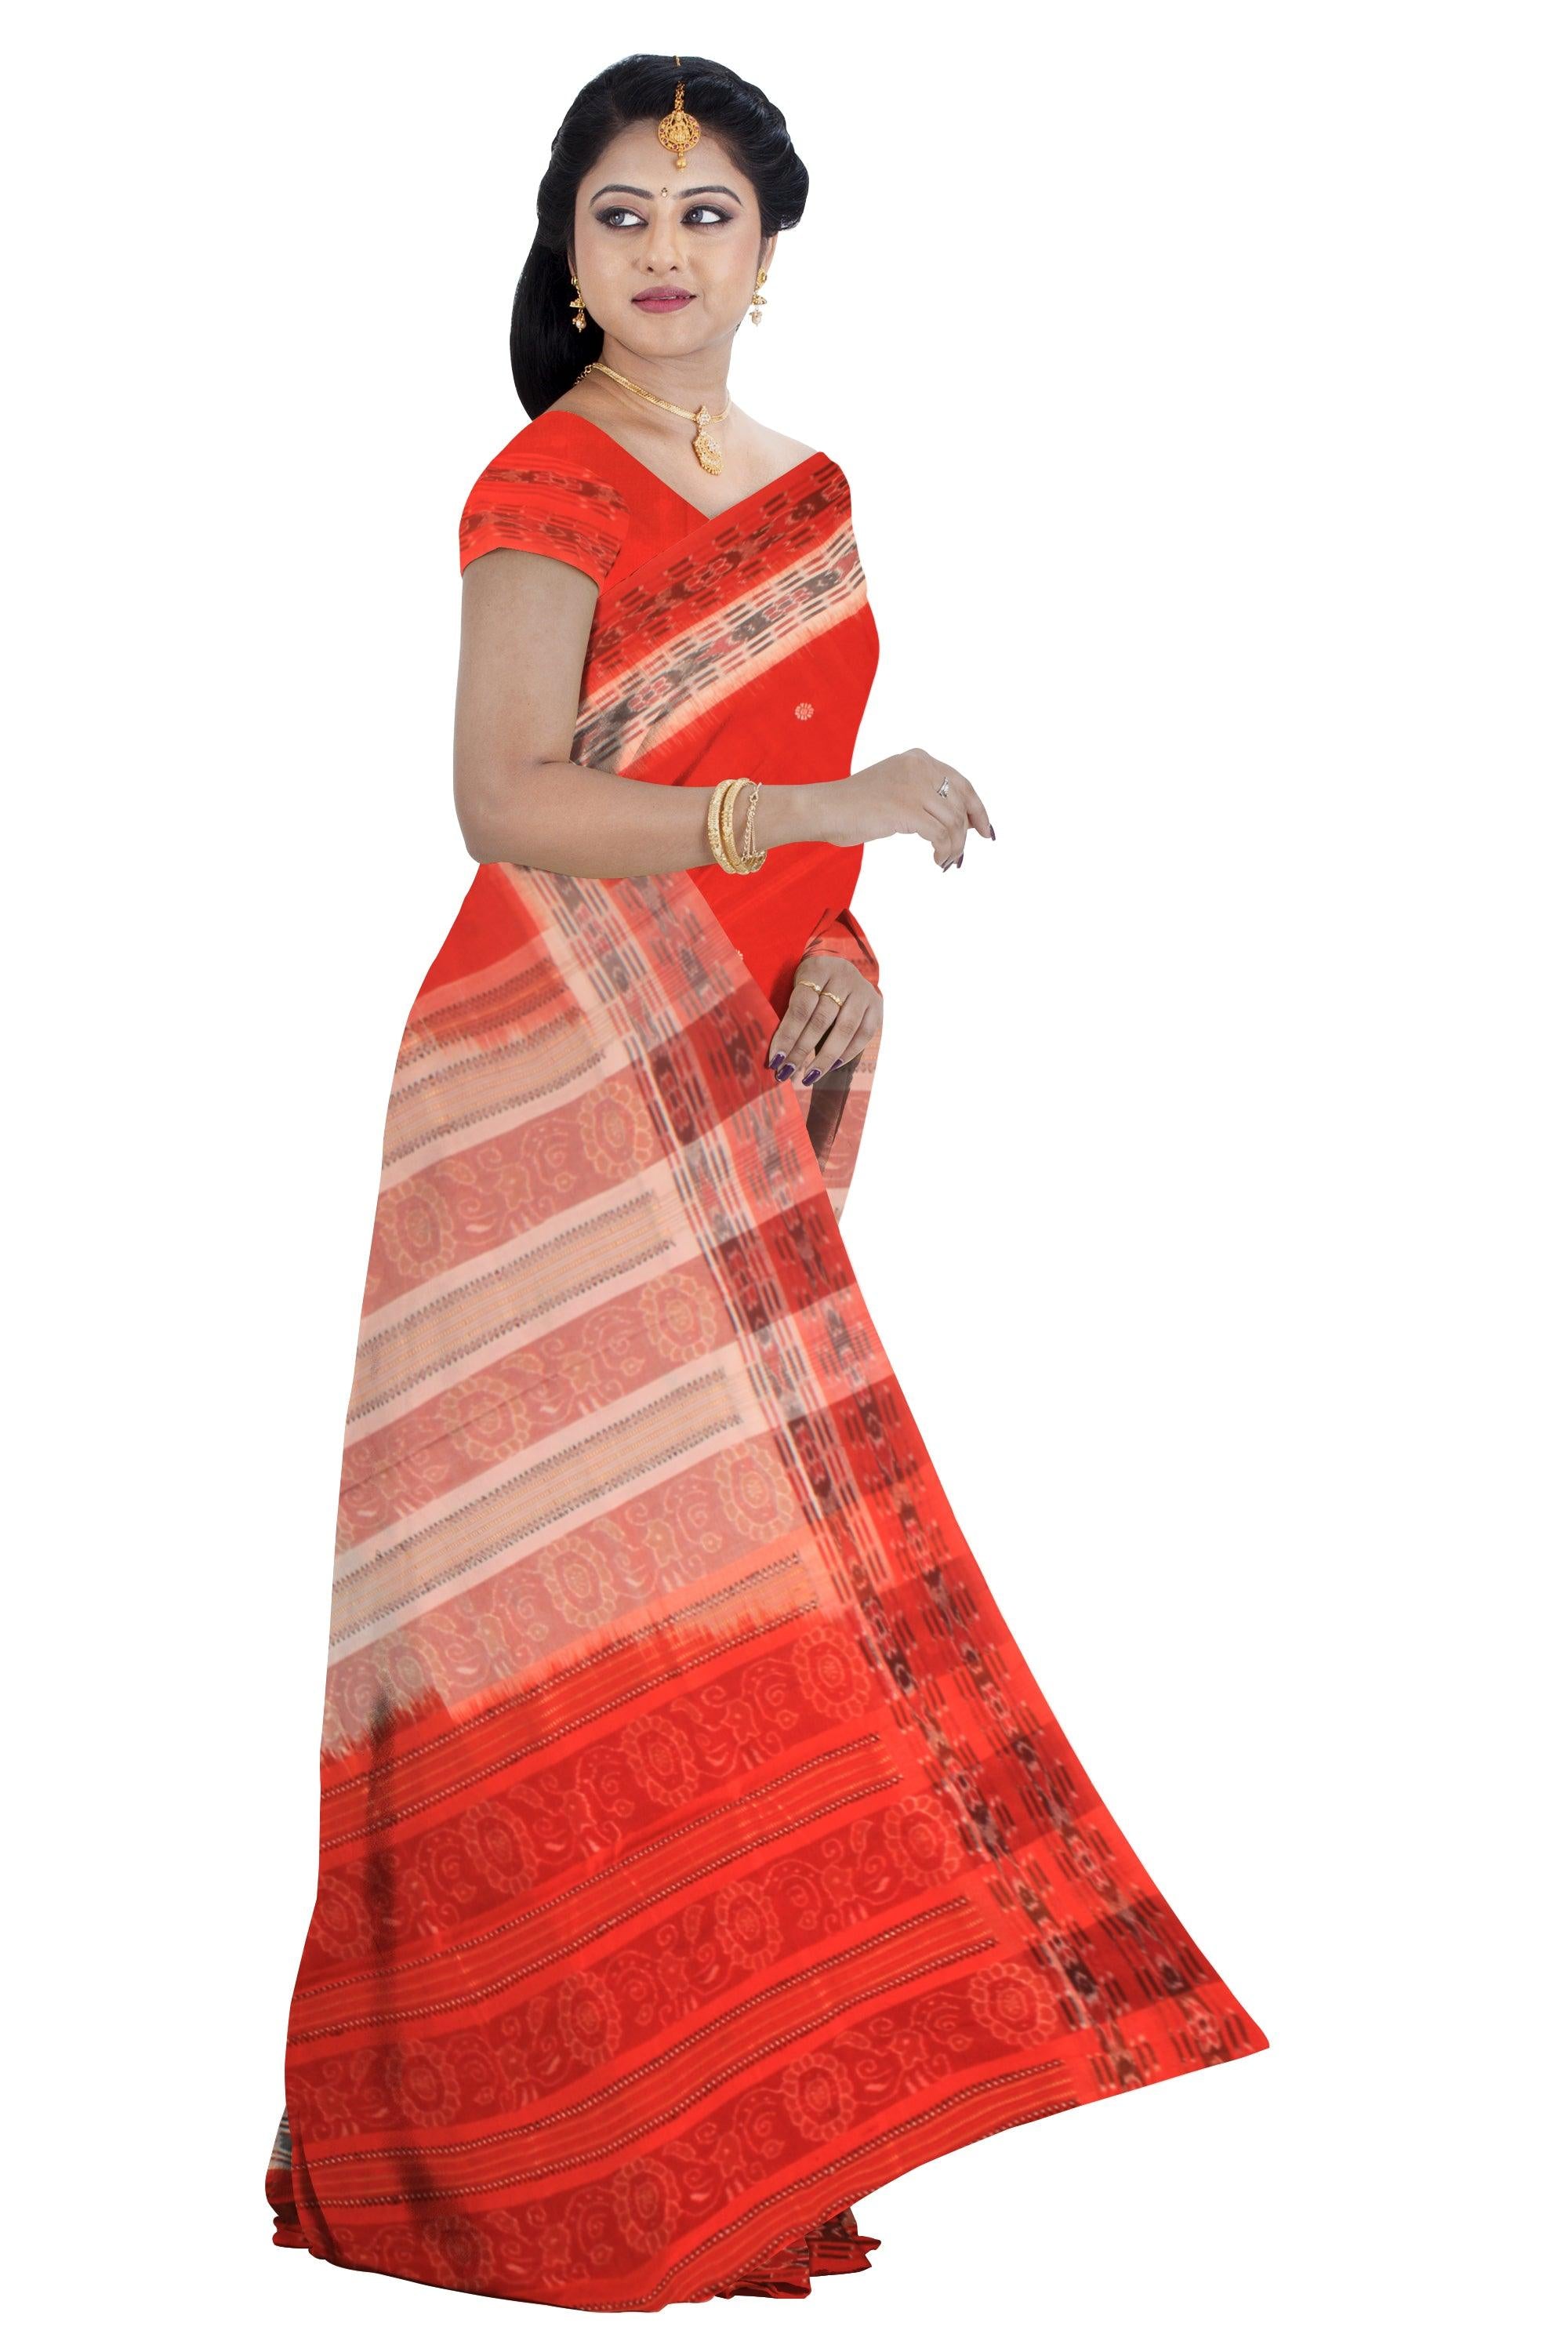 Sambalpuri cotton Saree in Orange and Black Color with booty design in body   with blouse piece. - Koshali Arts & Crafts Enterprise